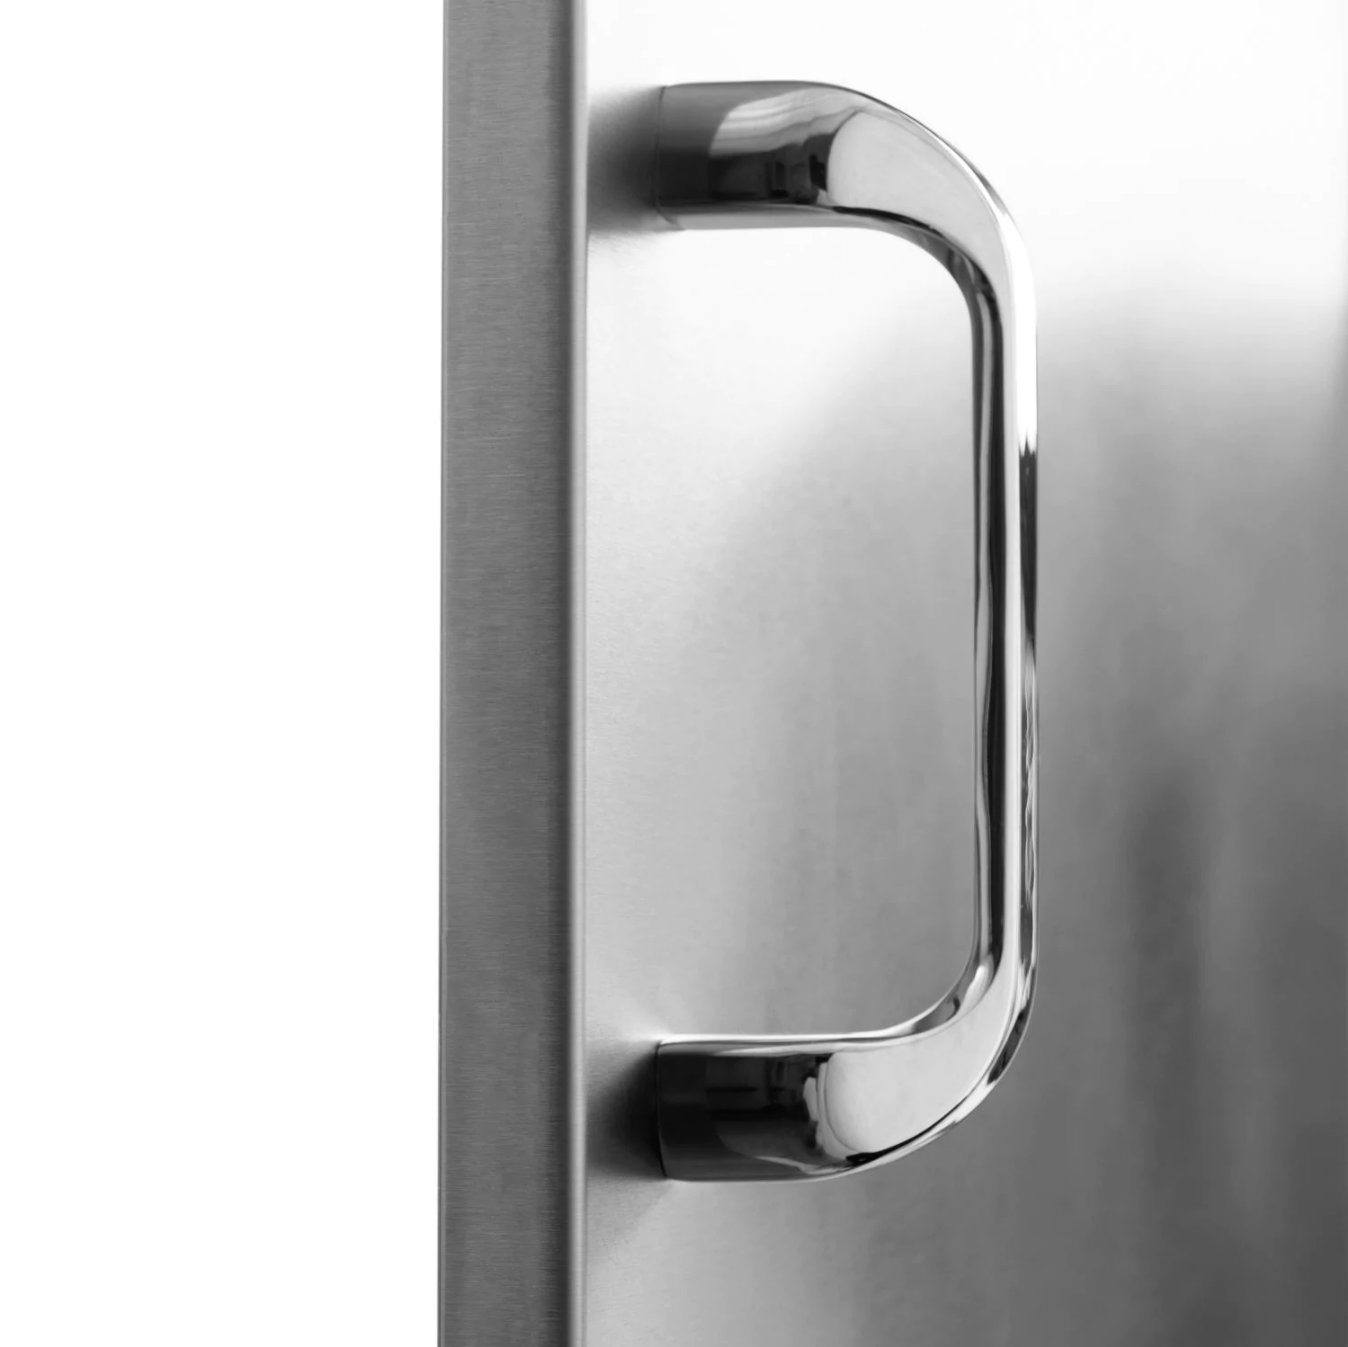 PCM 260 Series 25" Stainless Steel Double Access Door